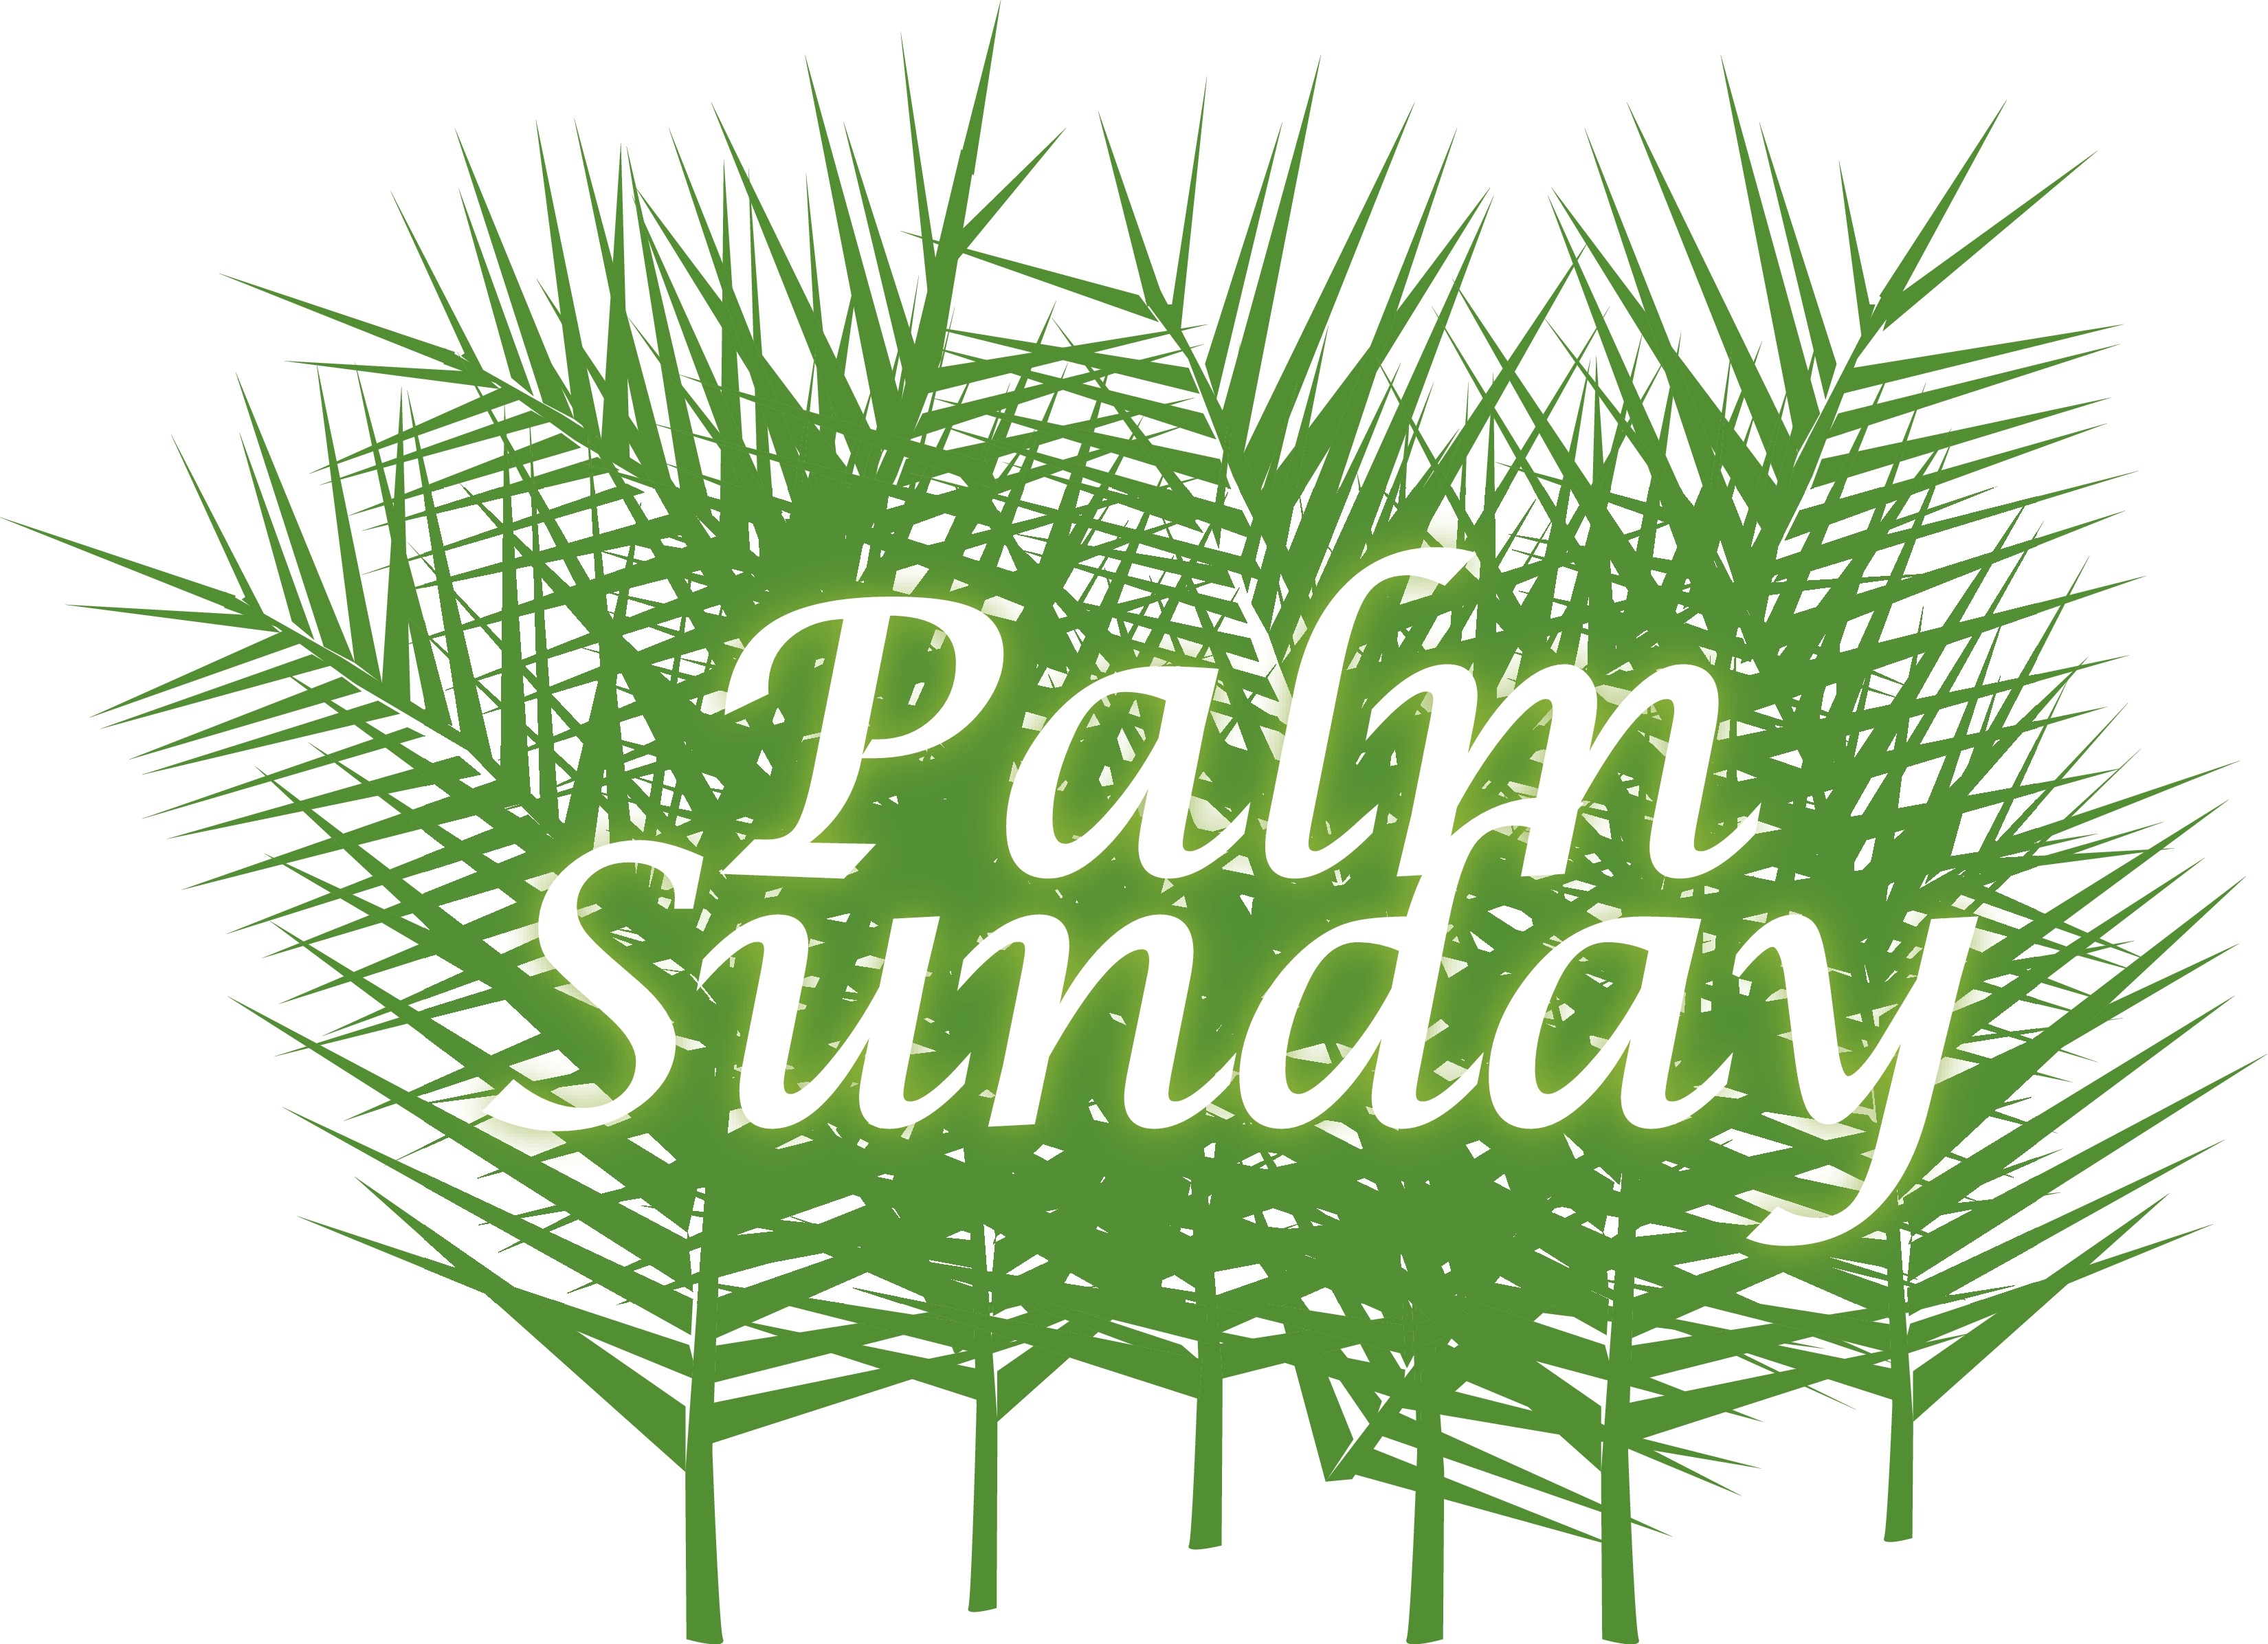 Palm sunday photos found on the web.